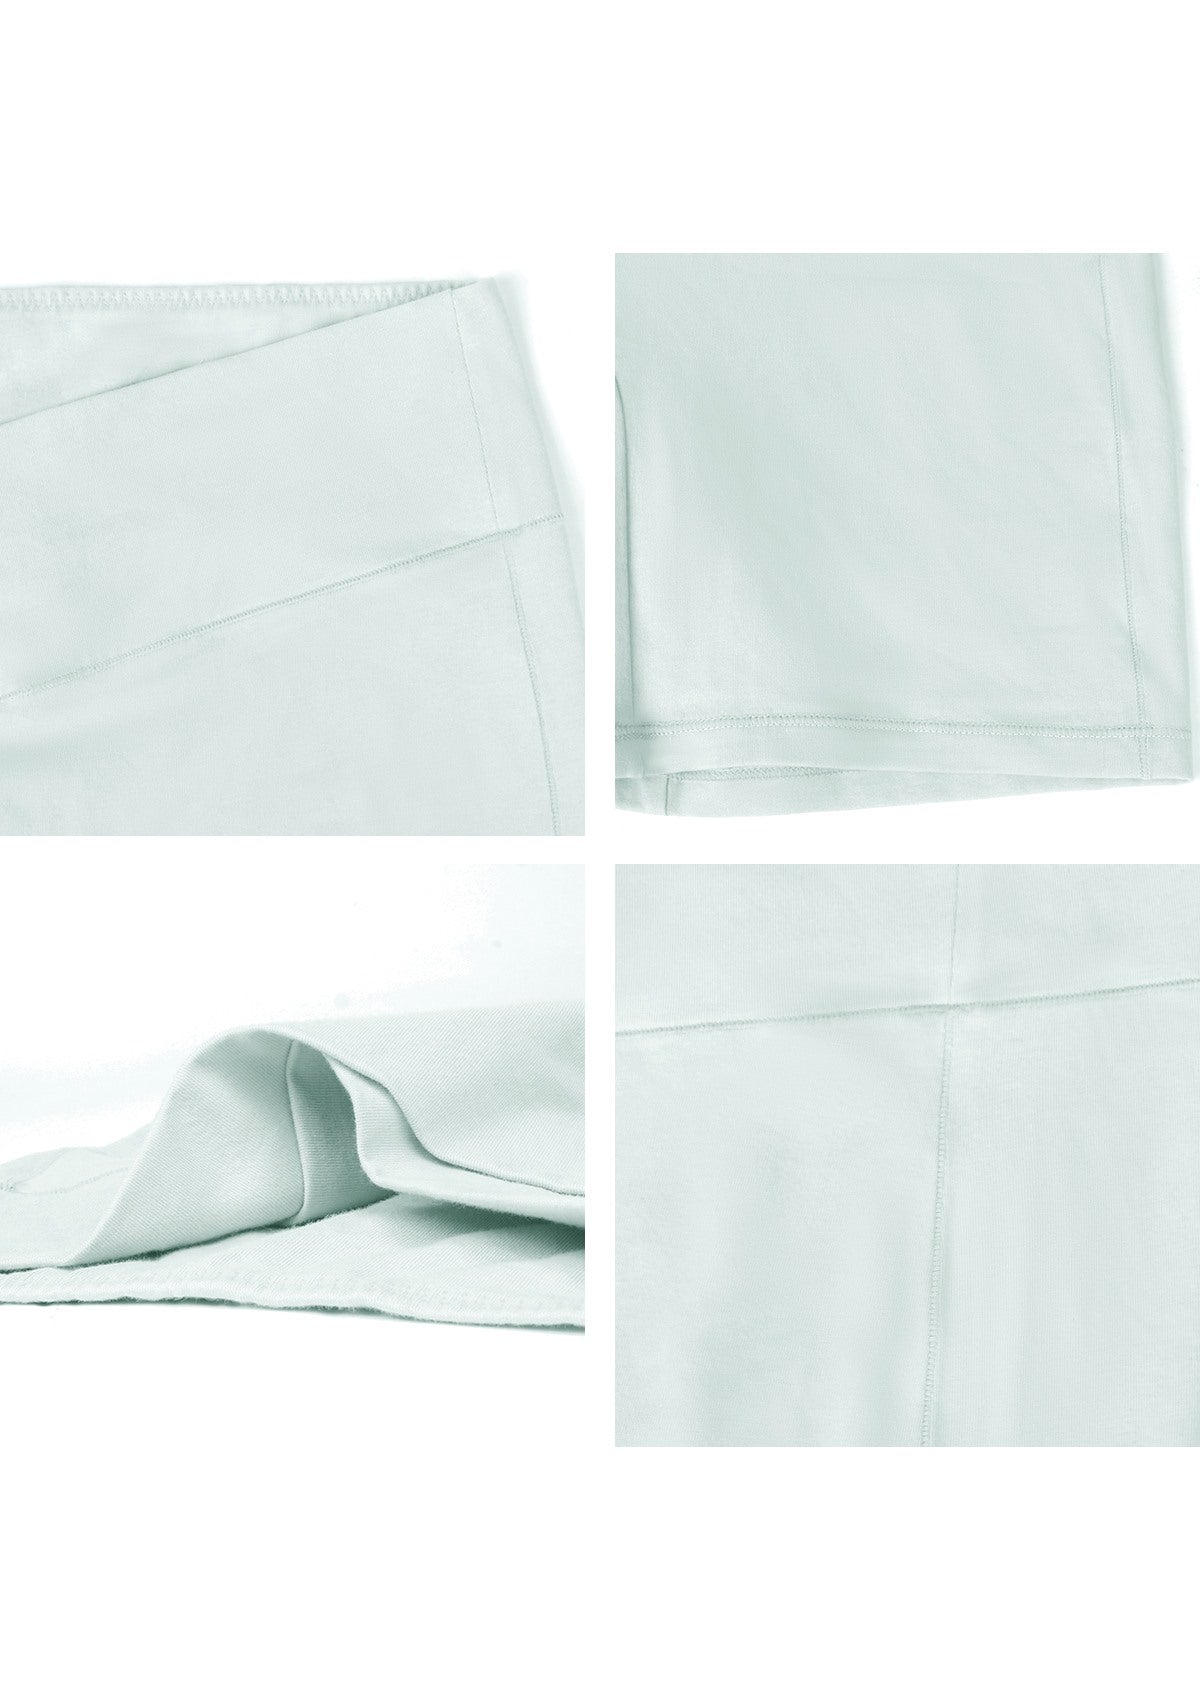 All-Day Comfort High-Rise Cotton Boyshorts Underwear 3 Pack - L / Black+White+Beige